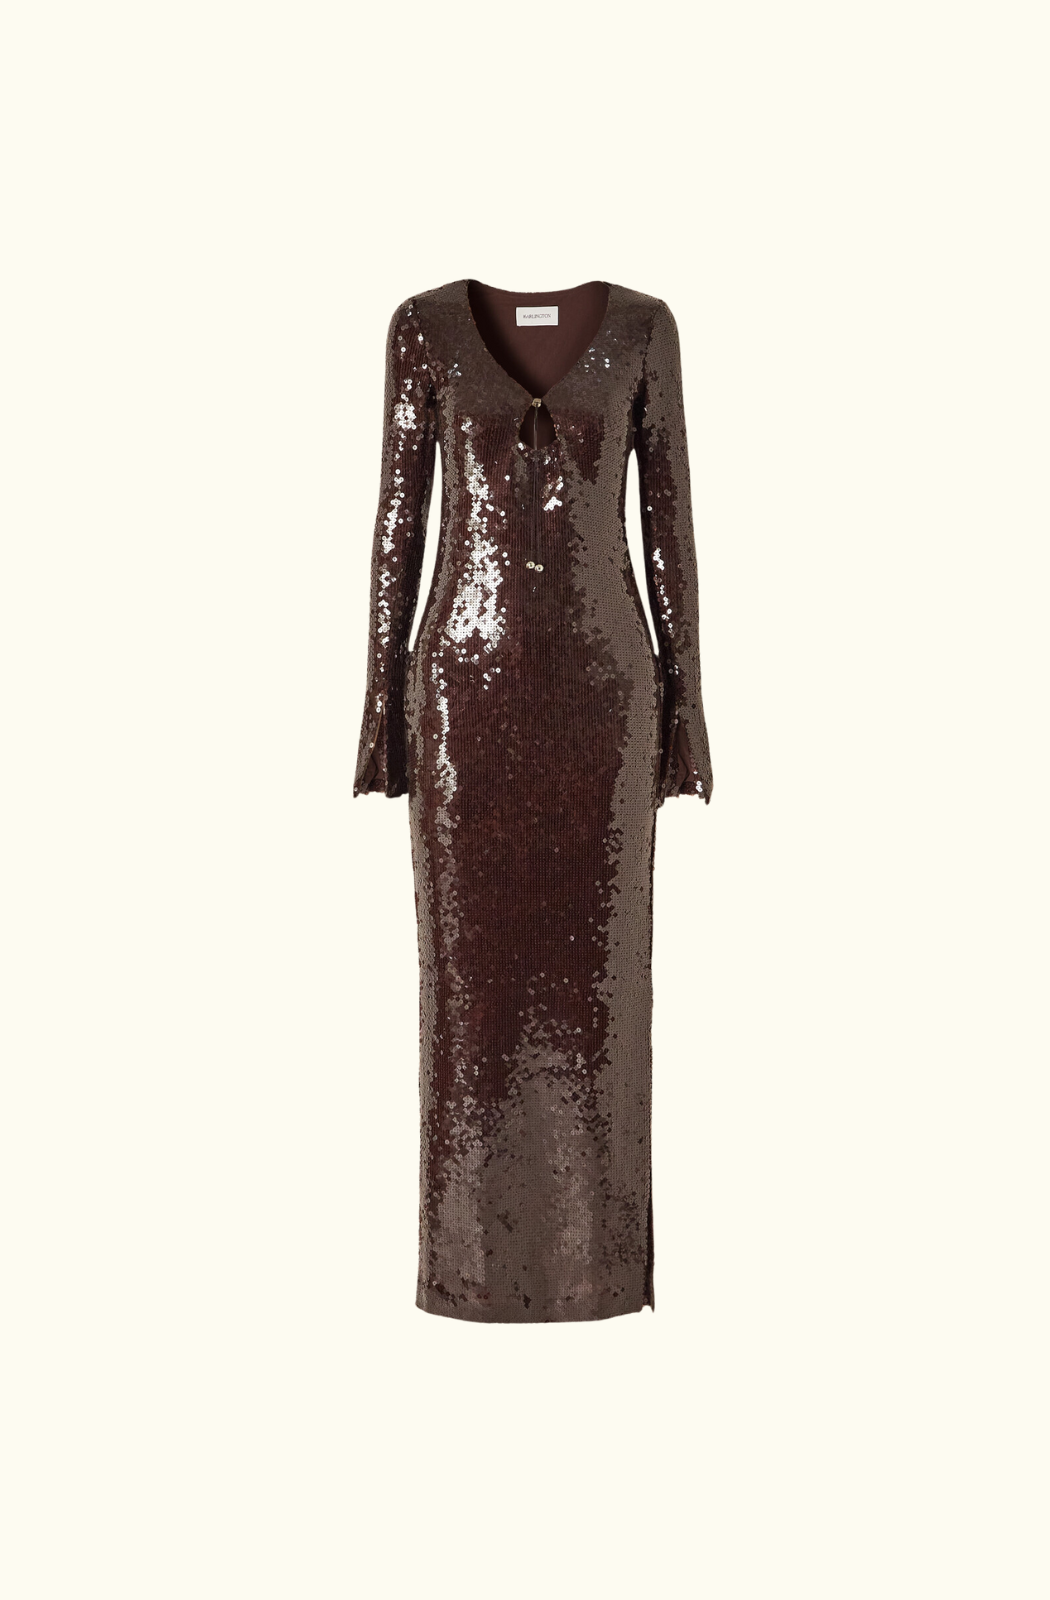 16Arlington Solaria Sequin Midi Dress - Chocolate Brown